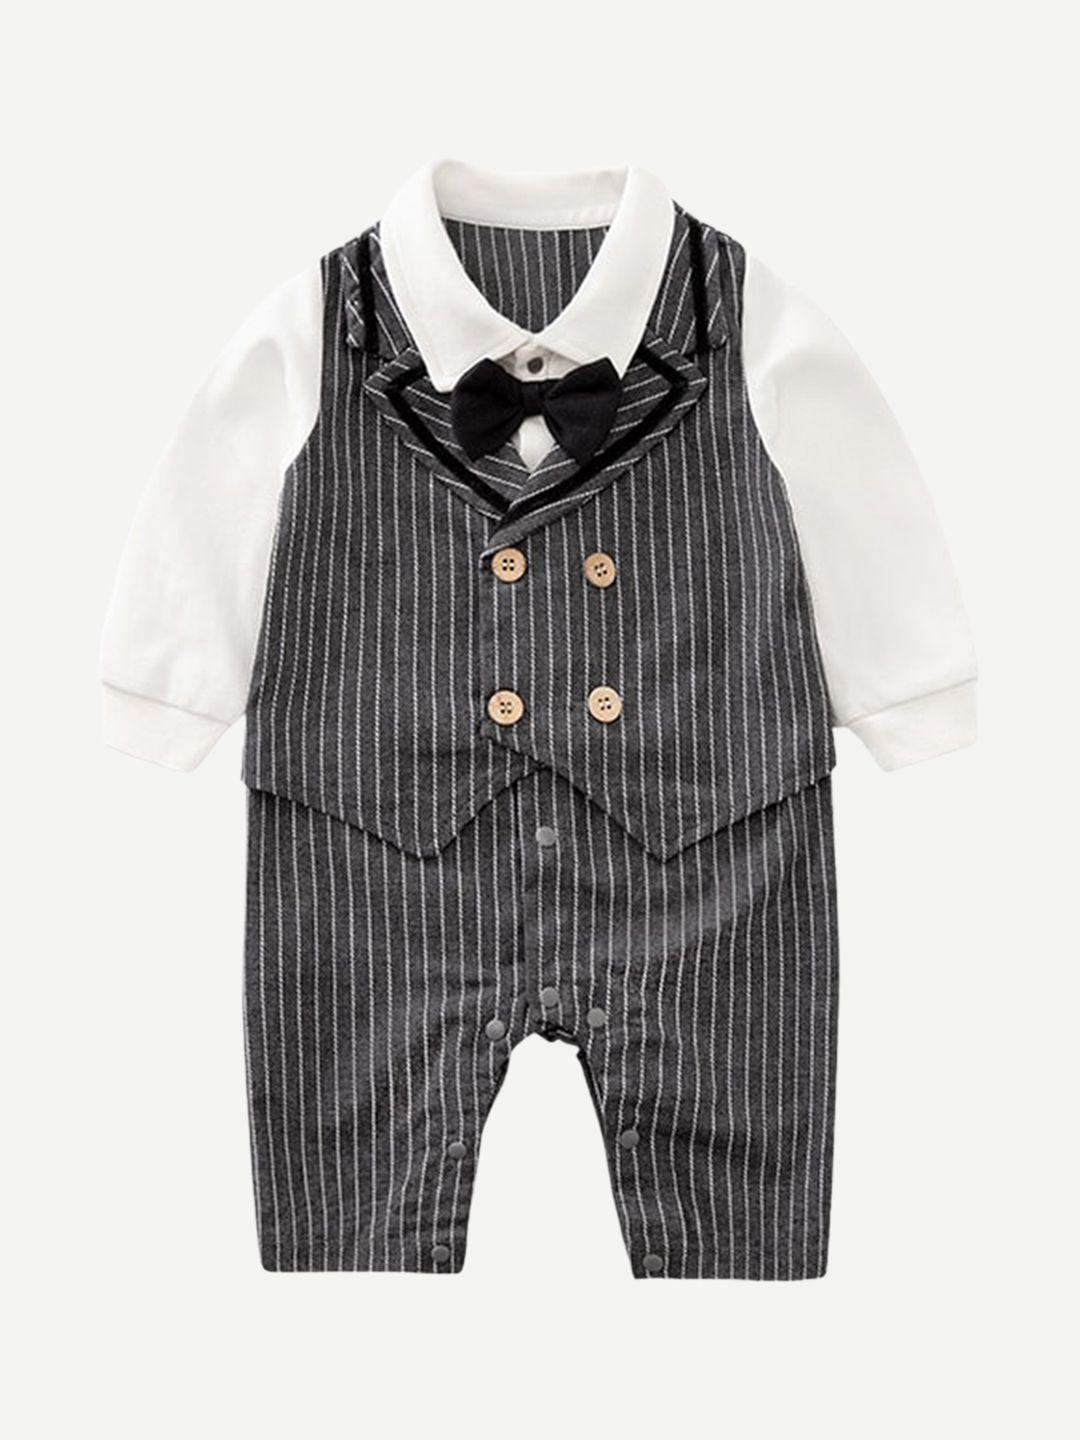 stylecast infant boys black stripes cotton rompers